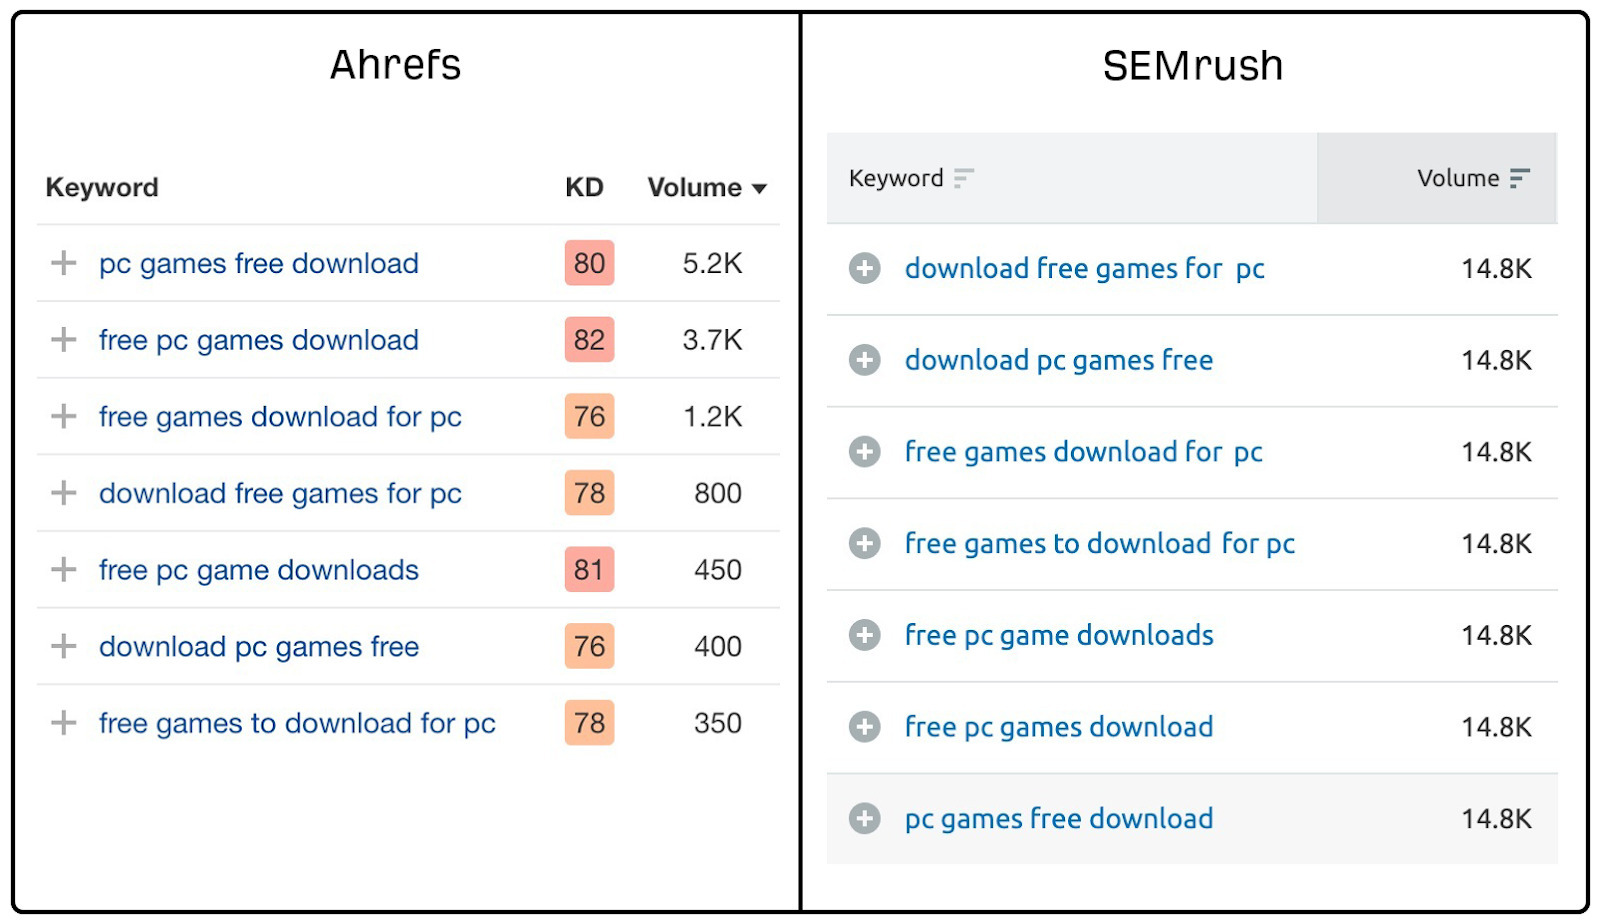 Keyword groupings in Ahrefs vs Semrush